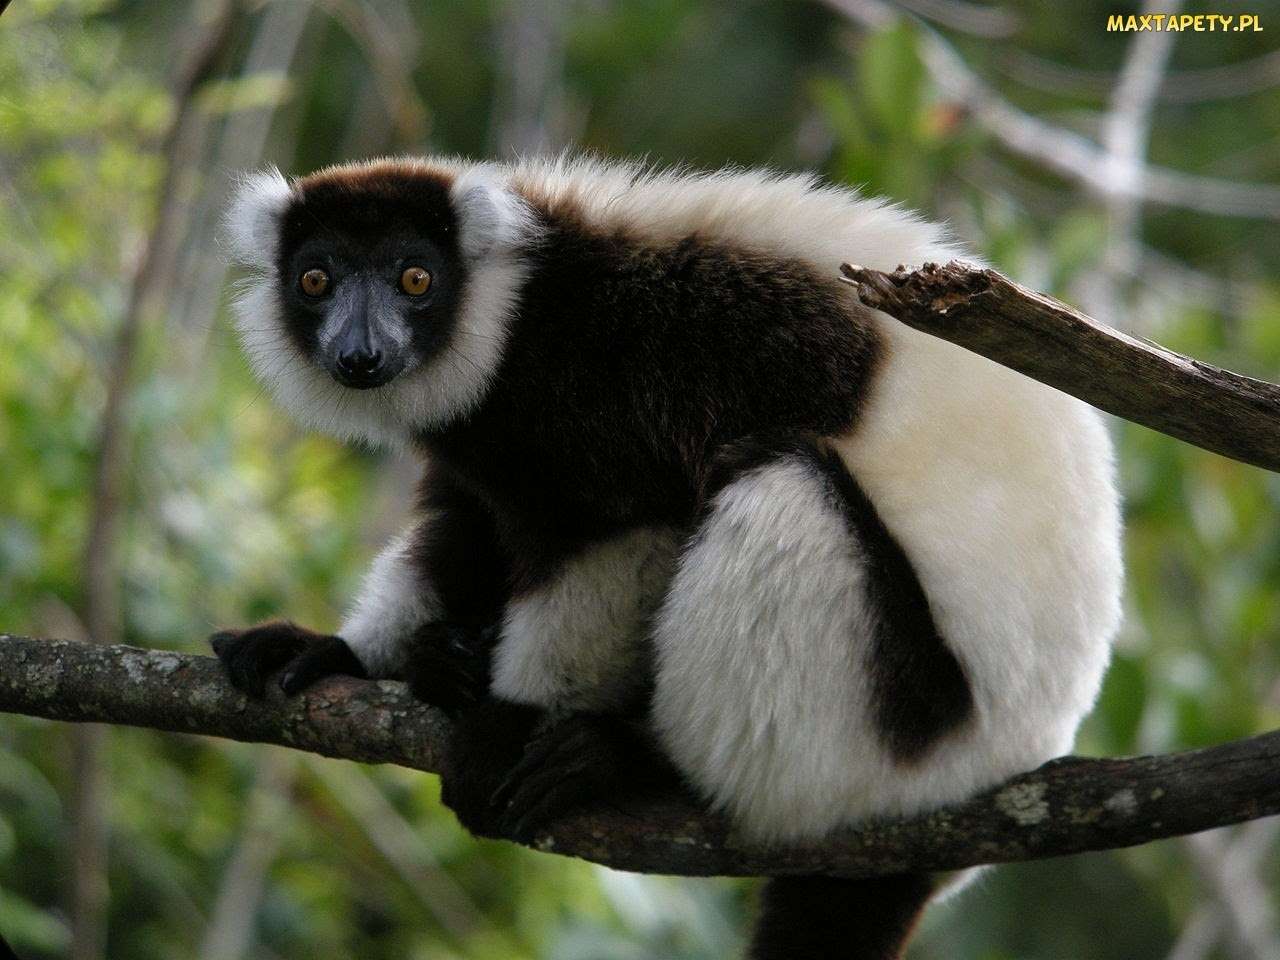 The lemur is mad online puzzle